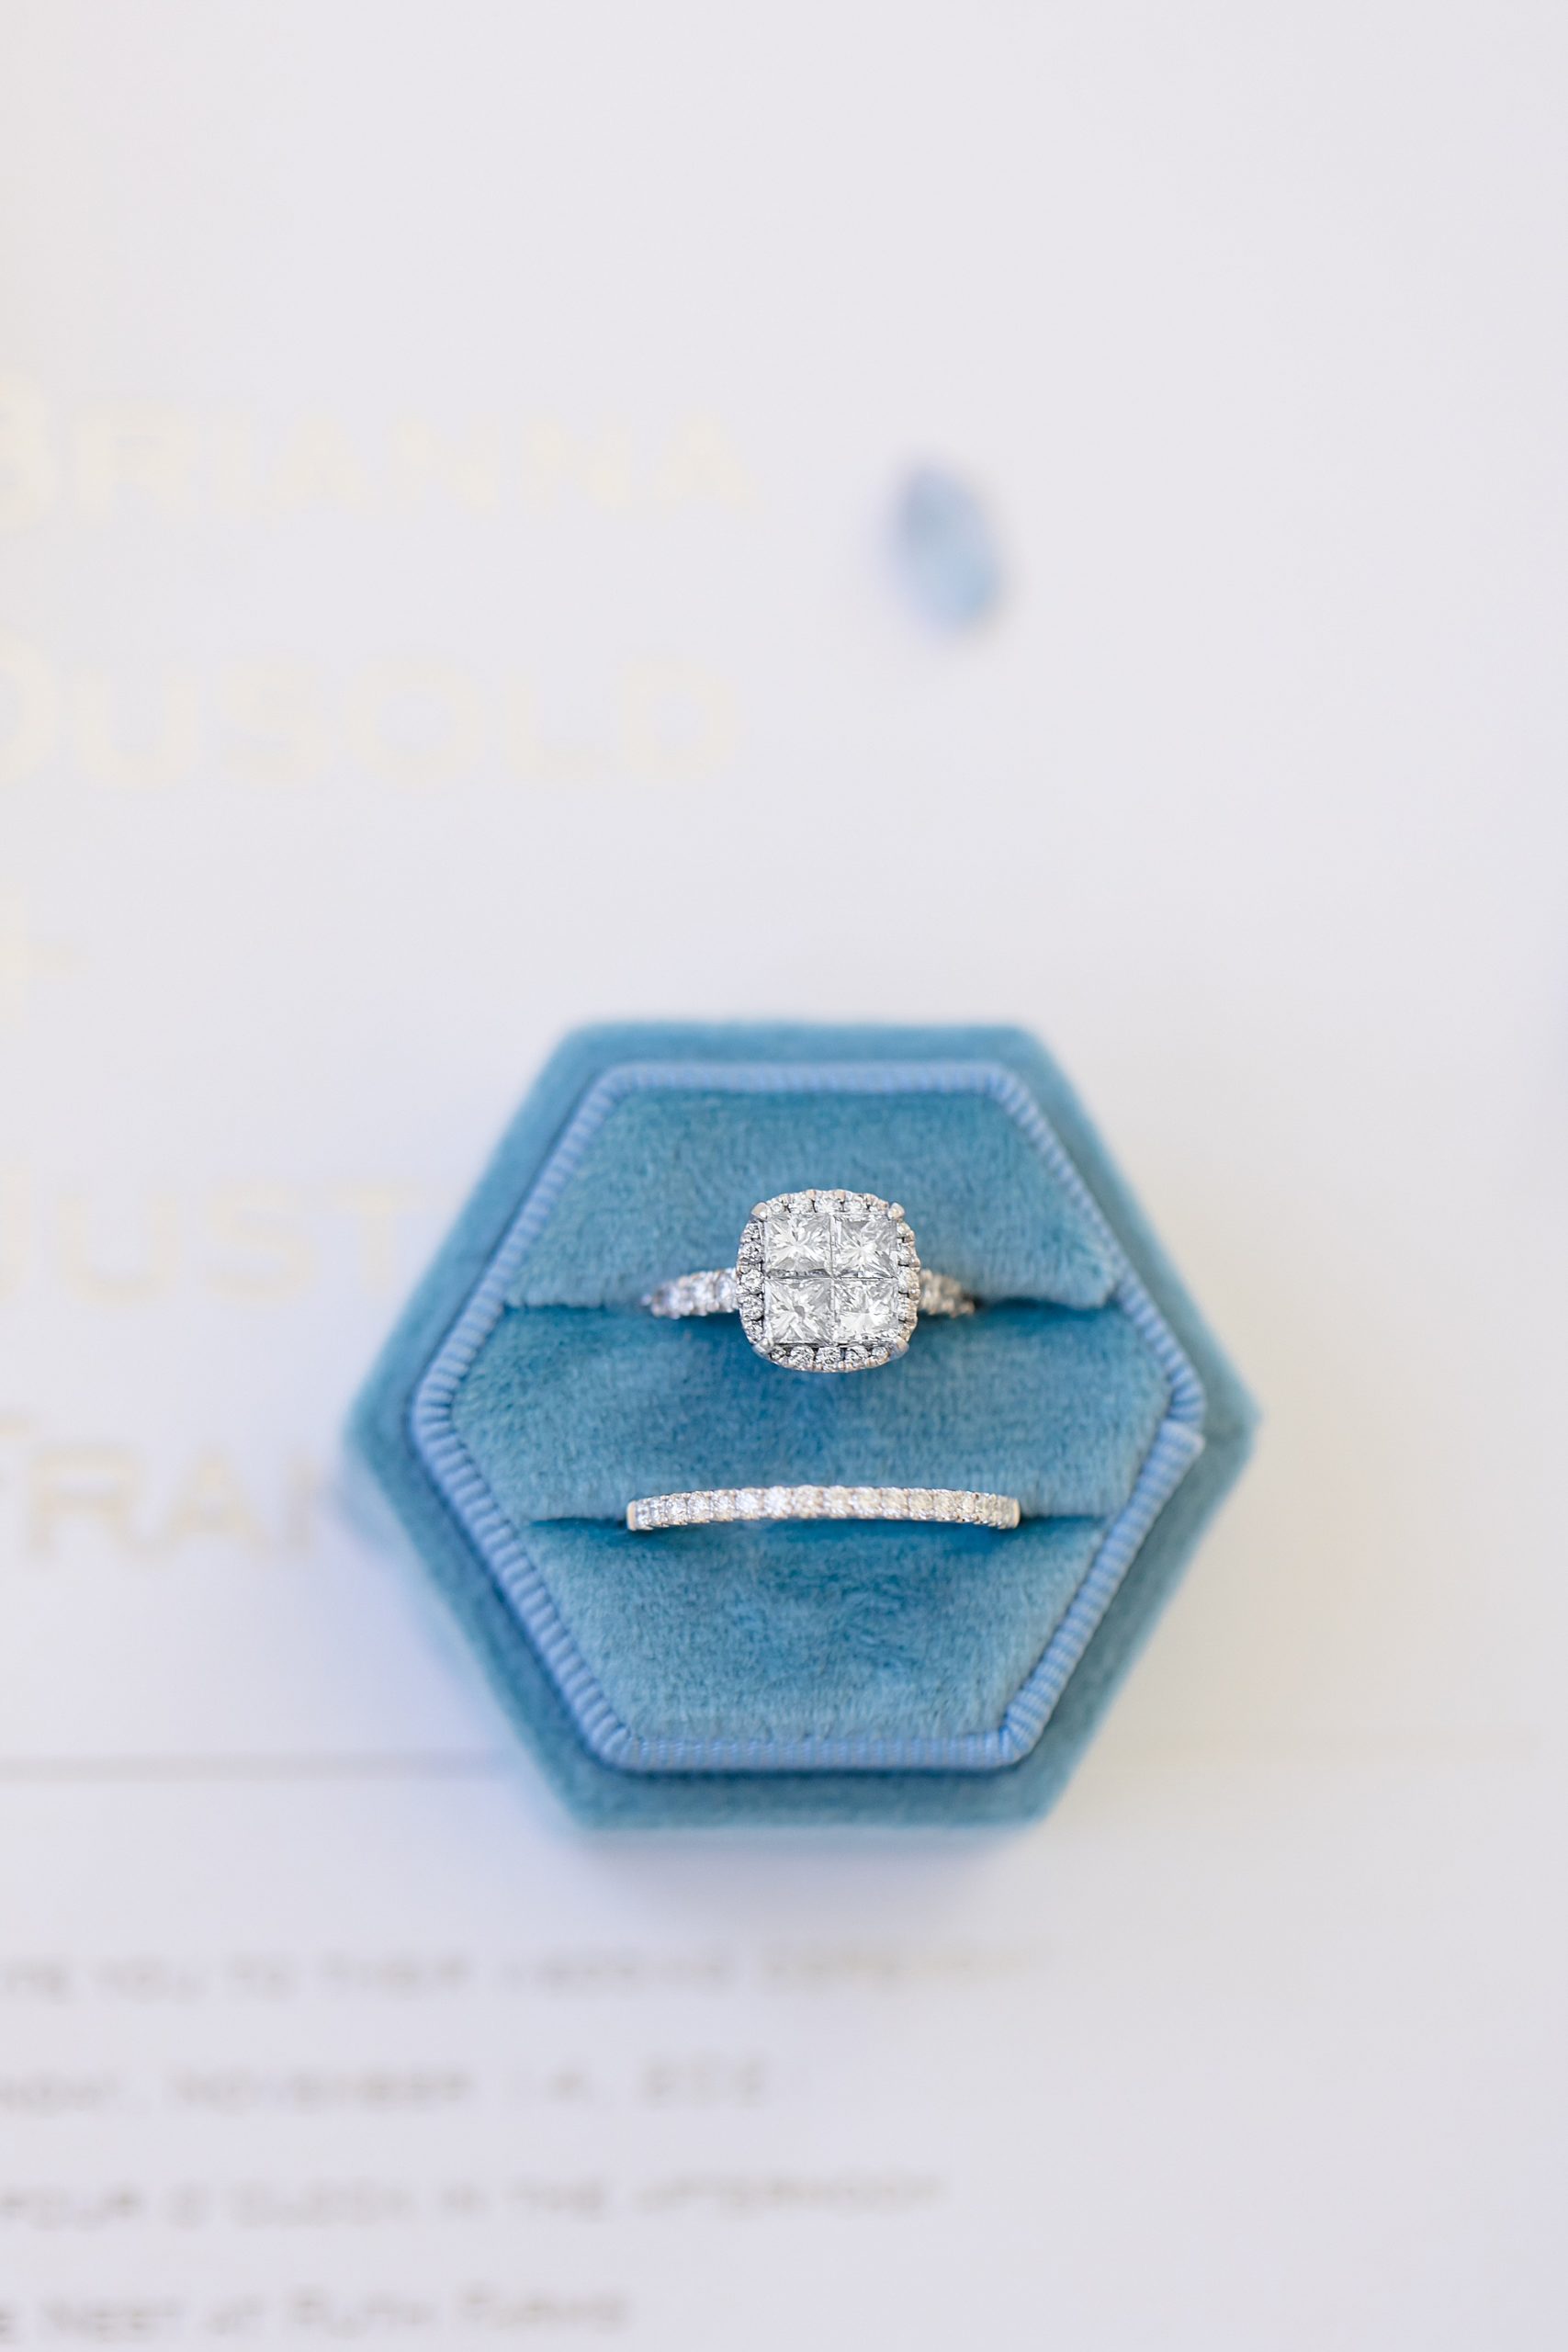 wedding rings in light blue box for TX wedding